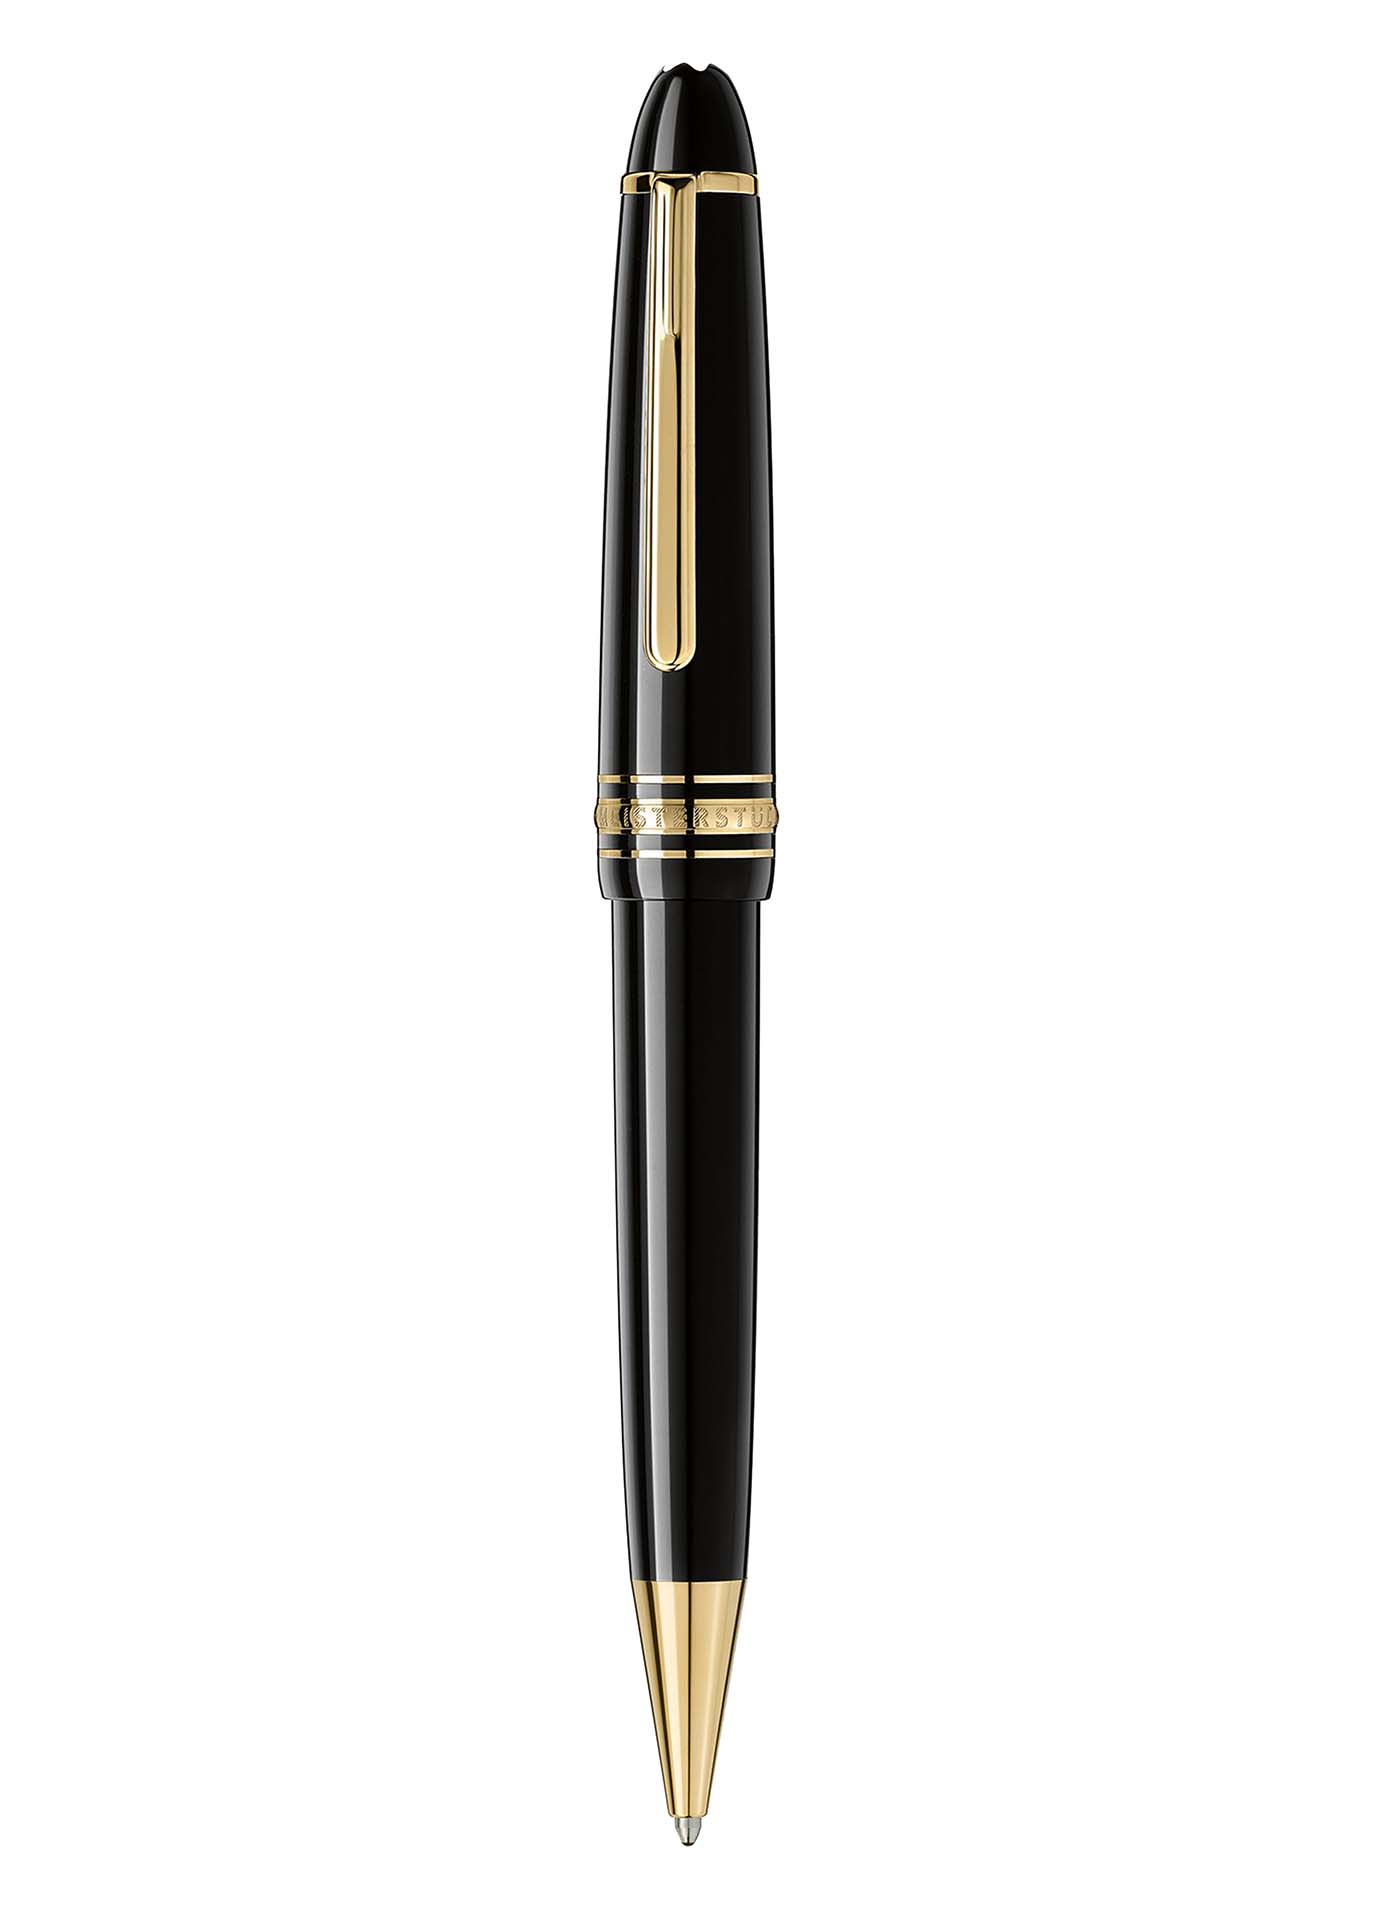 Meisterstuck Gold-Coated LeGrand Ballpoint Pen 10456 Image